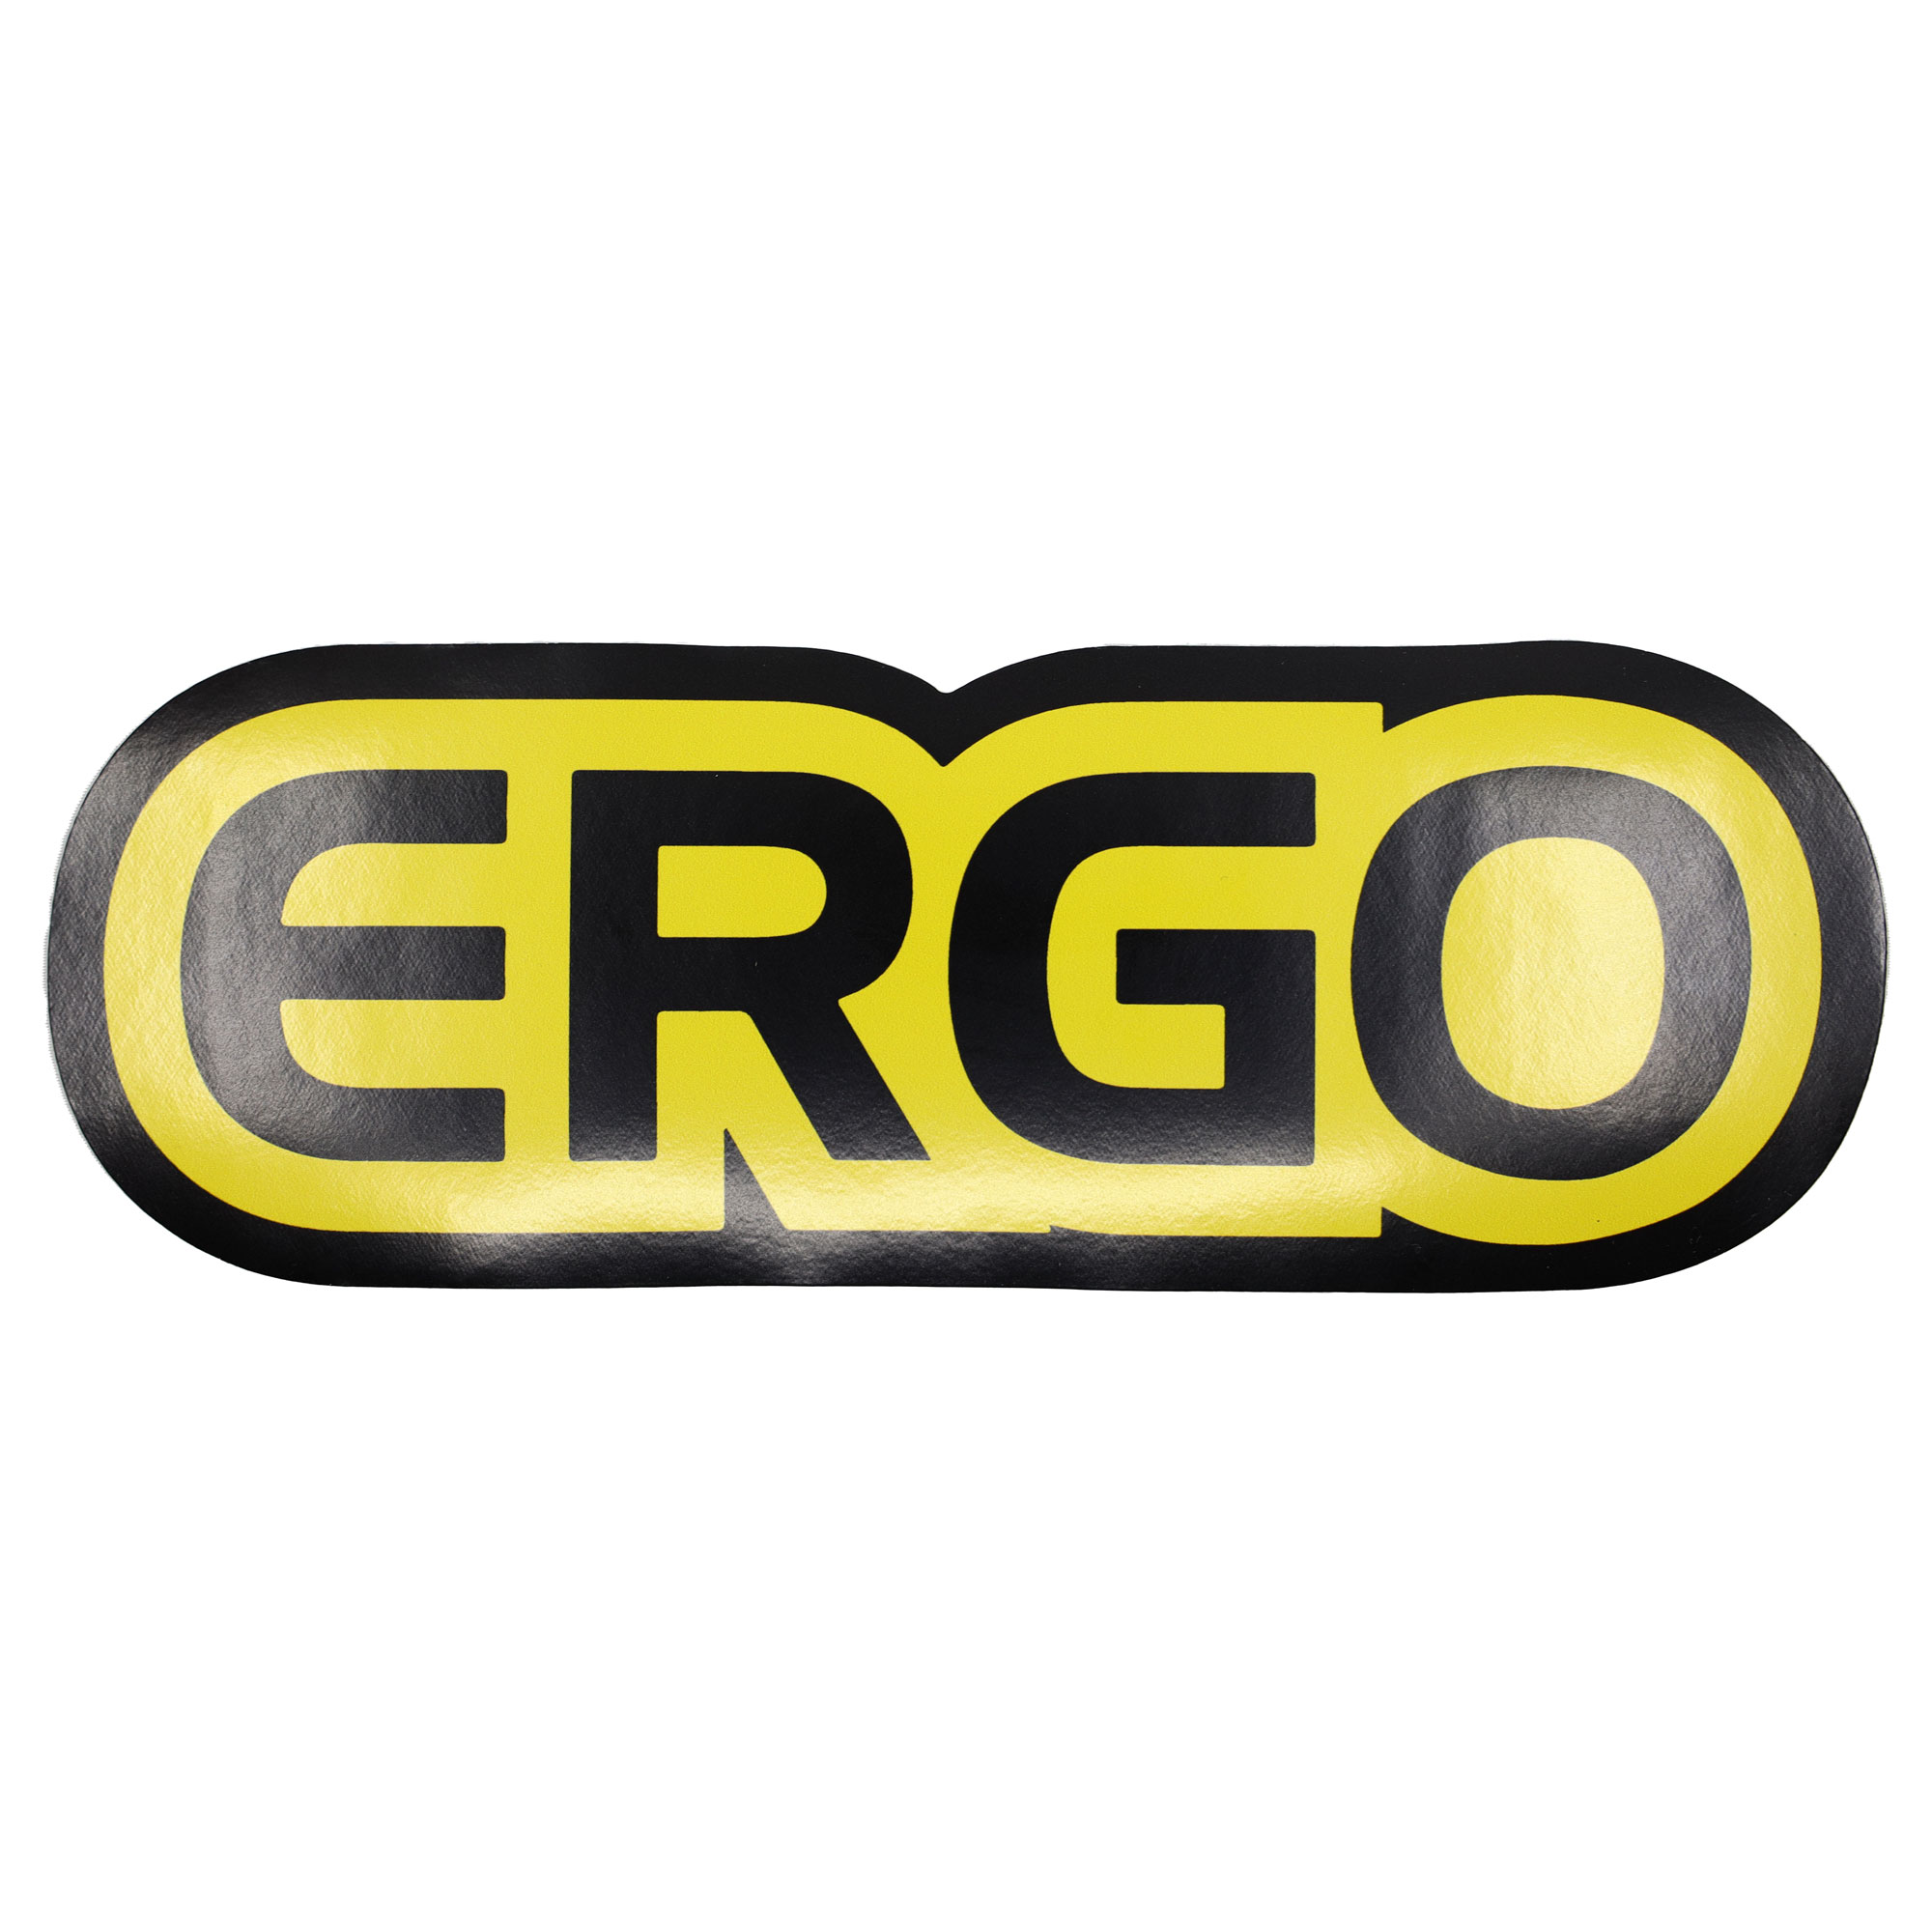 ERGO 8″ Decals - ERGO Grips